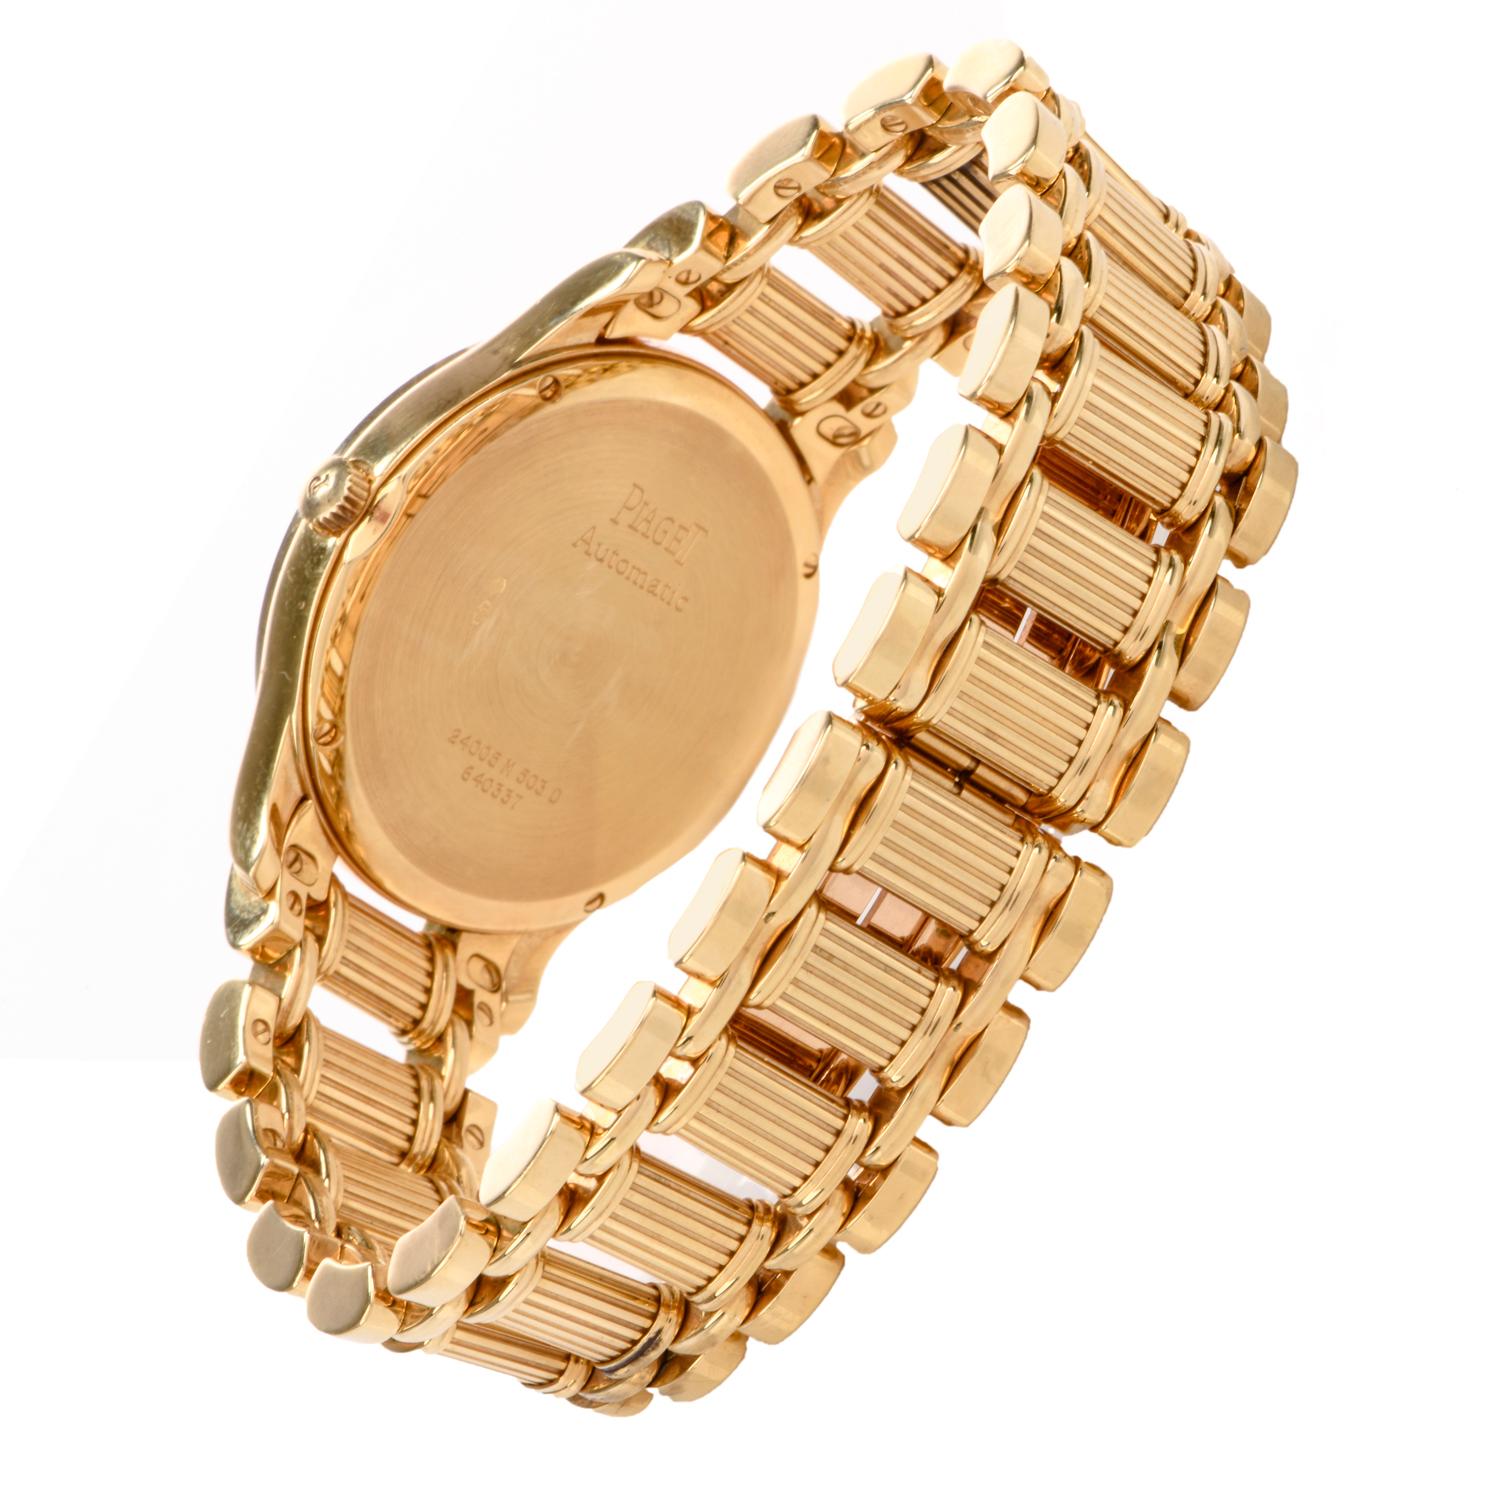 Piaget Polo 24005 M 503 D Diamond Onyx 18 Karat Yellow Gold Watch 1